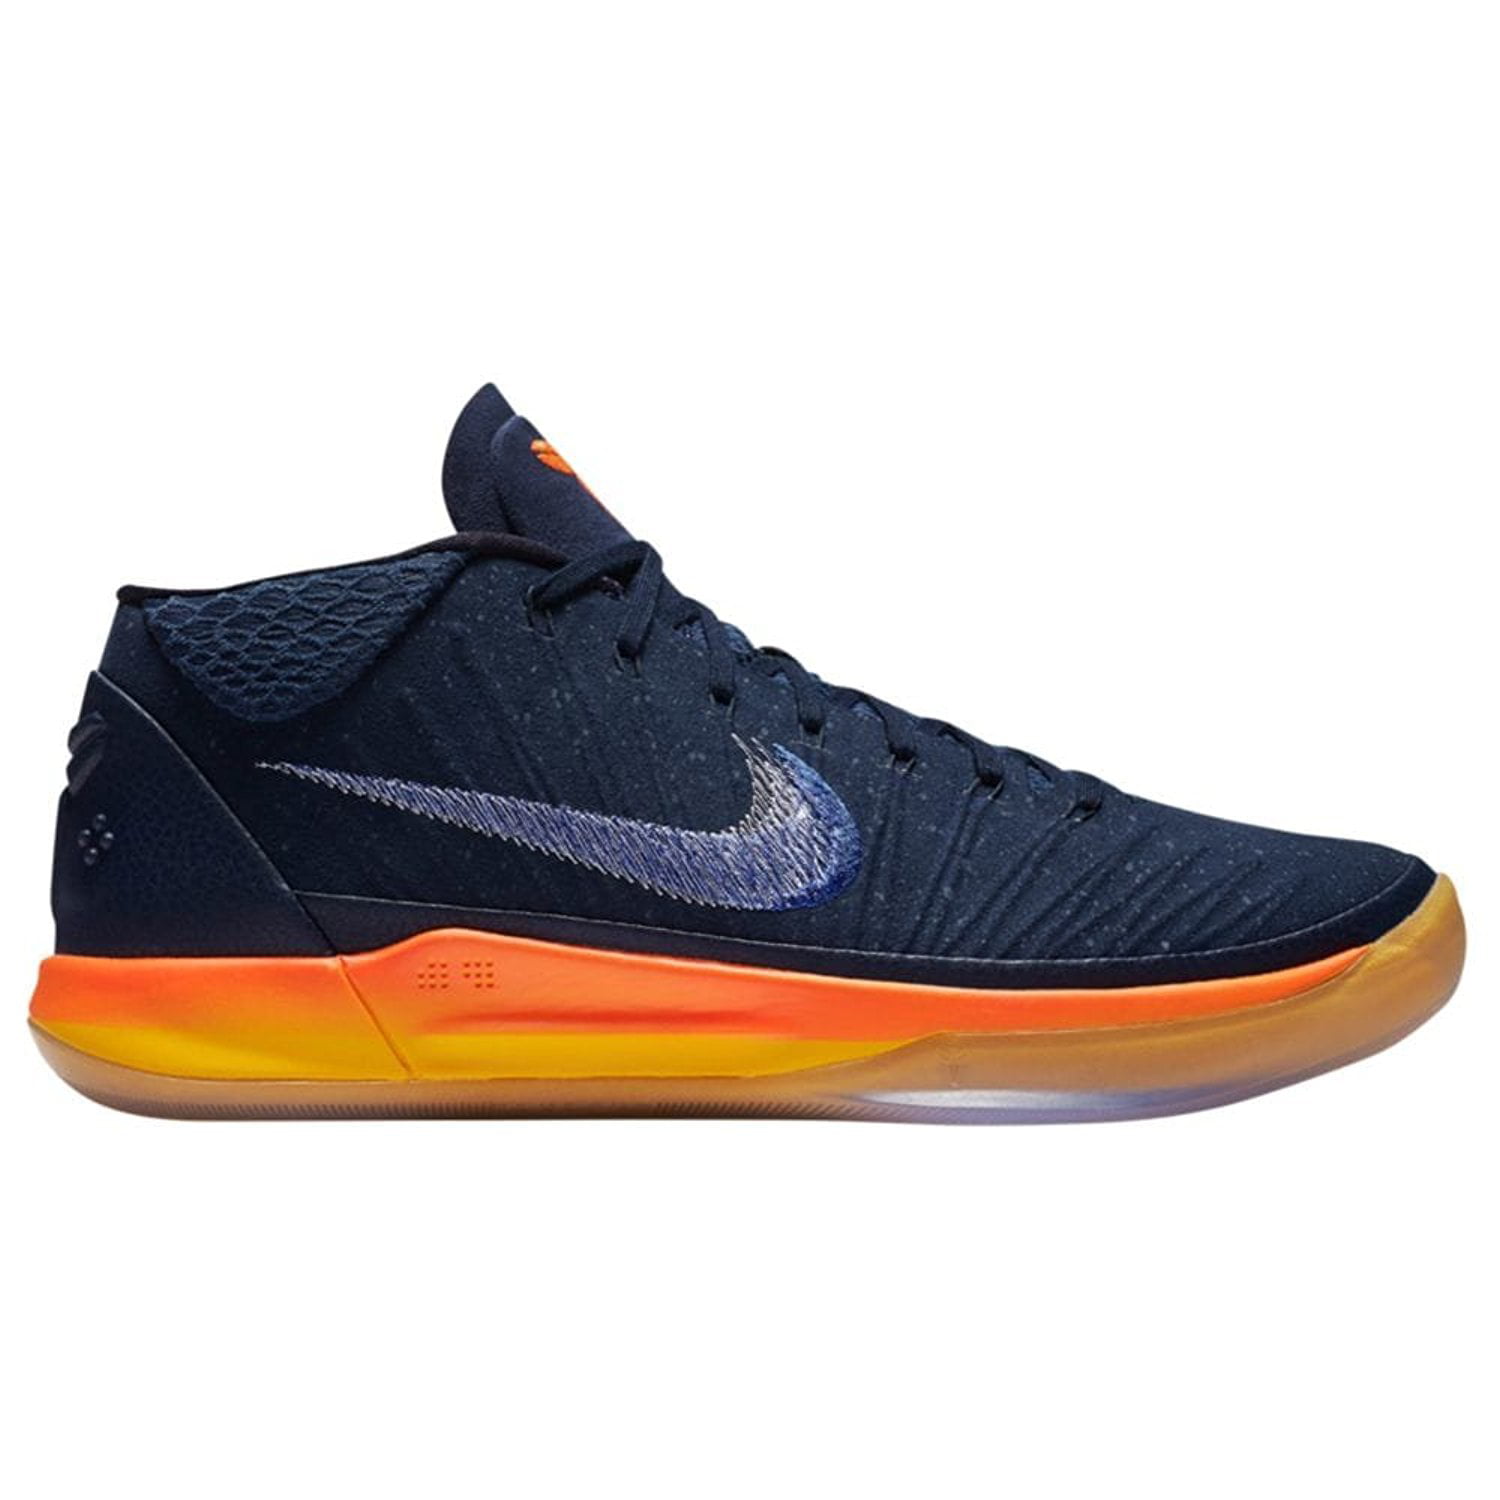 Nike Kobe AD Basketball Shoe, Obsidian 